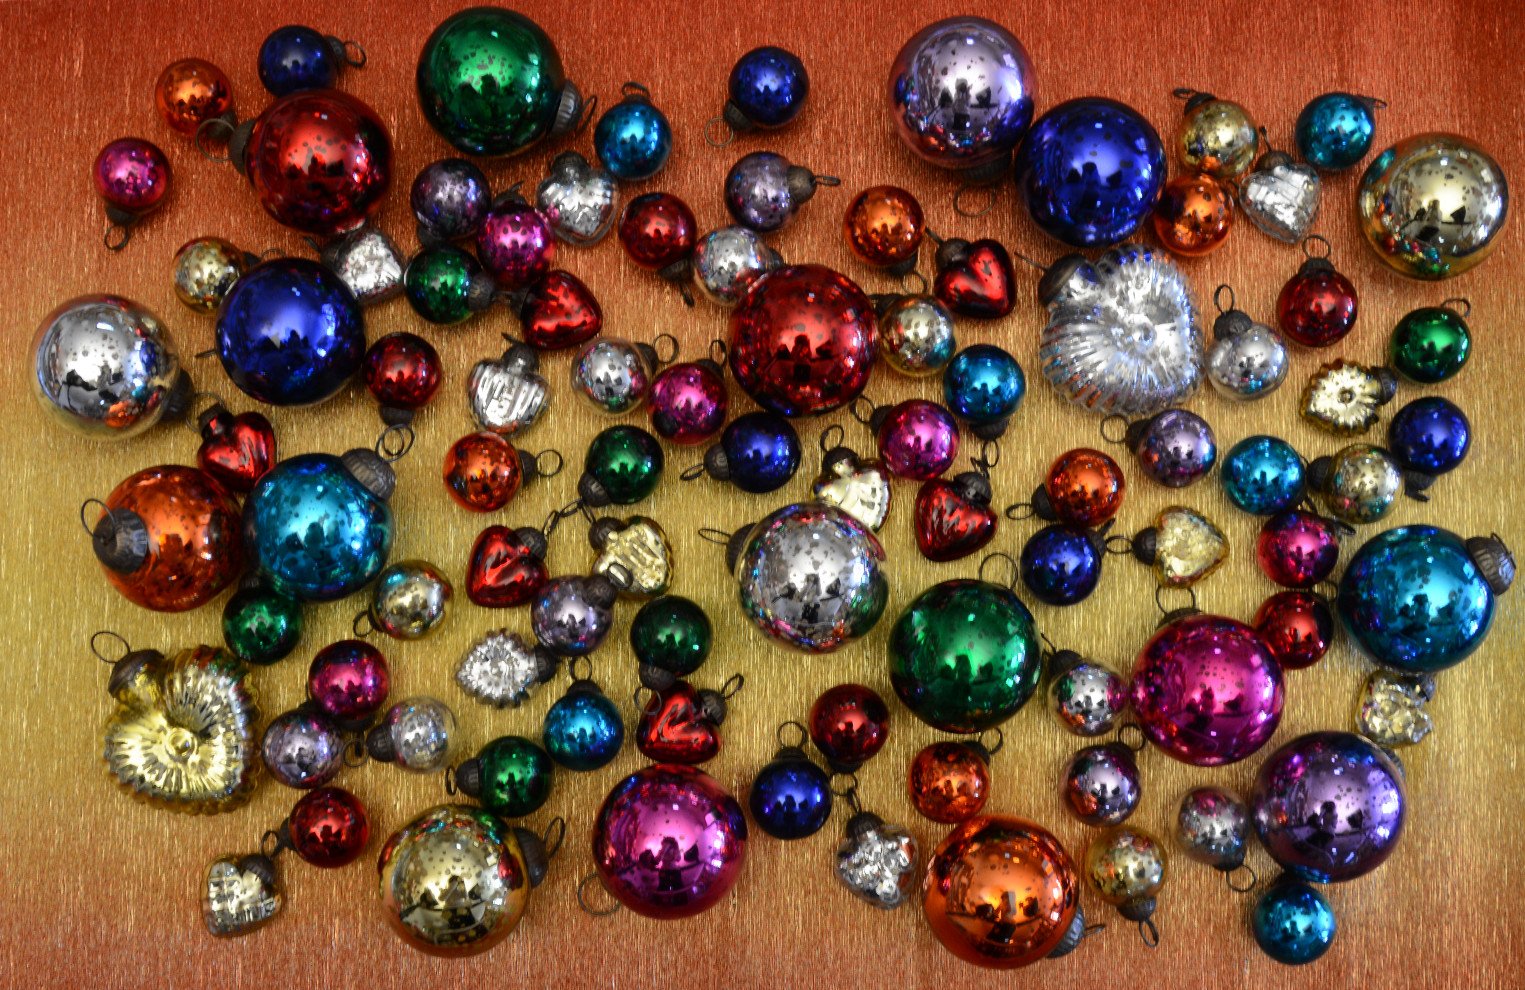 6 Pack | 1.5-Inch Purple Ava Mini Mercury Handcrafted Glass Balls Ornaments Christmas Tree Decoration